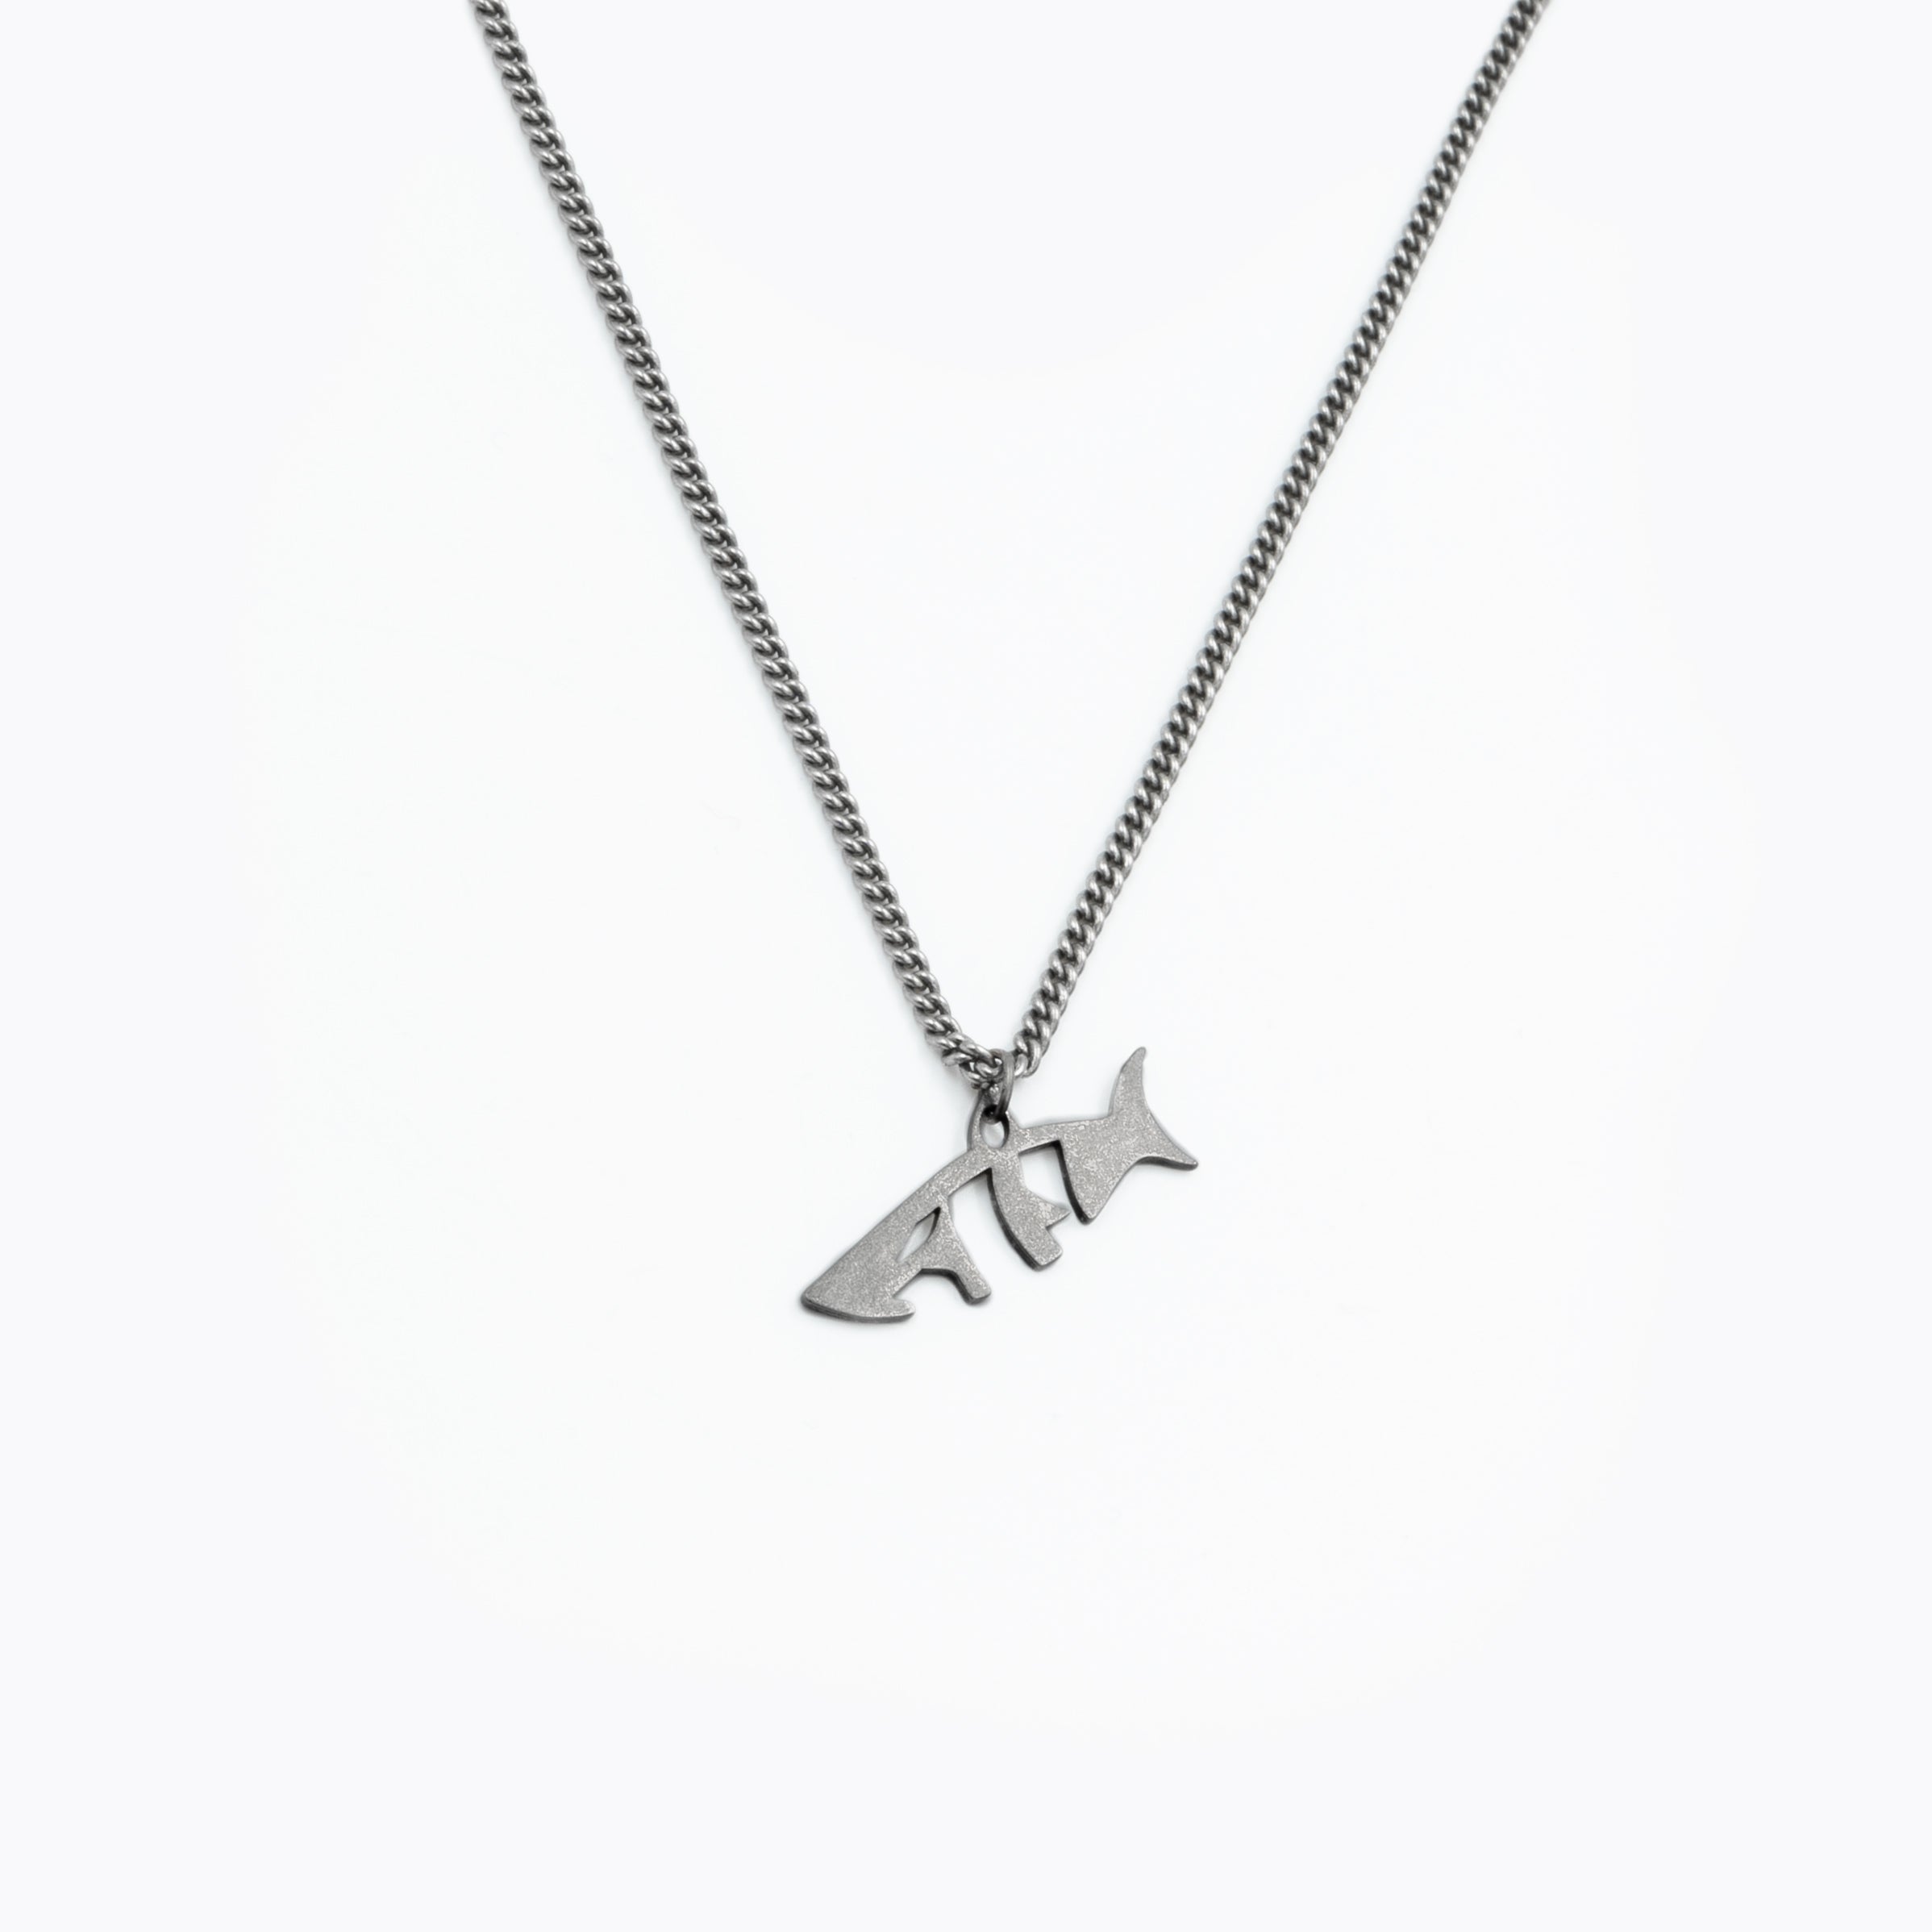 Sick Shark Necklace